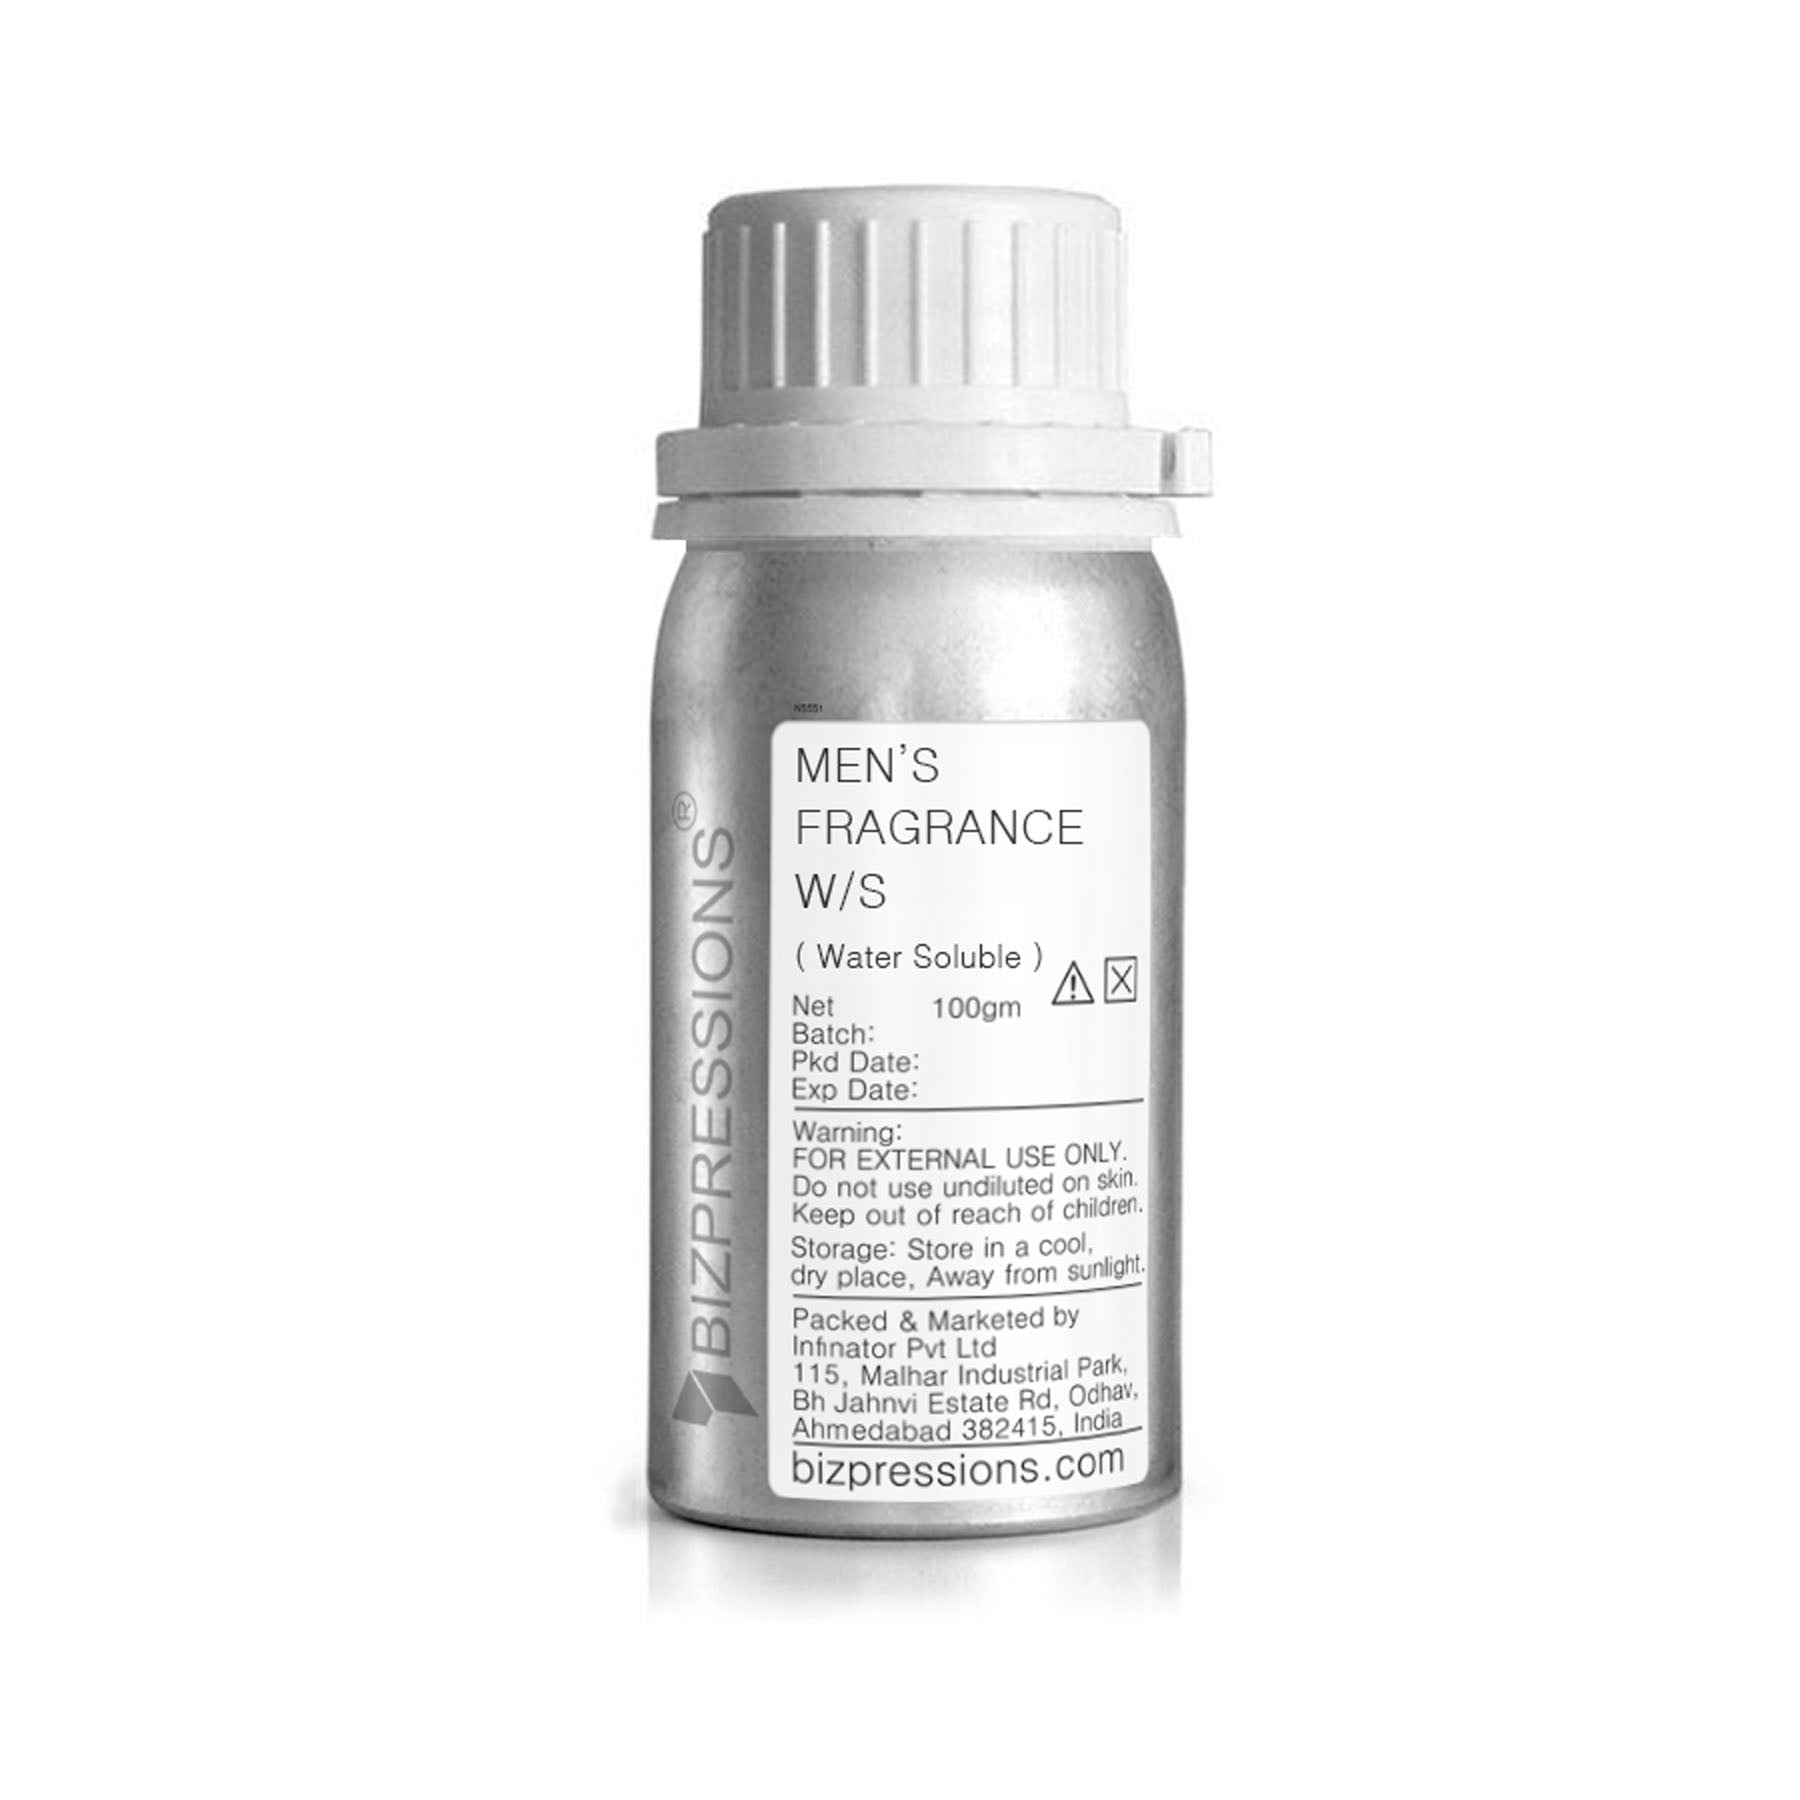 MEN'S FRAGRANCE W/S - Fragrance ( Water Soluble ) - 100 gm